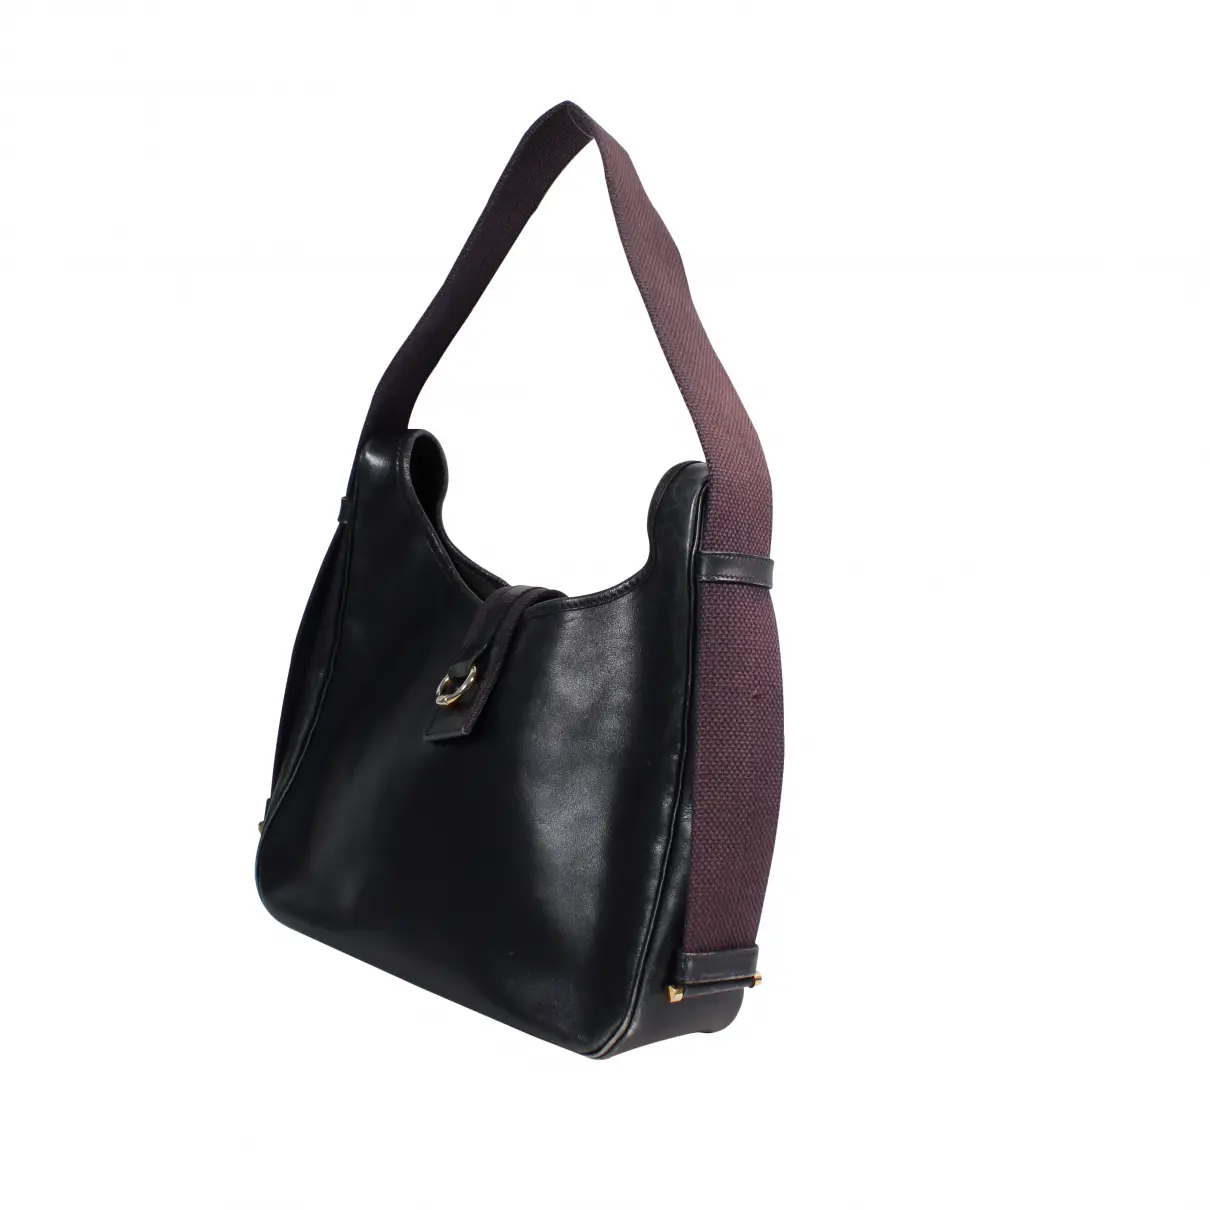 Buy Hermès Tsako leather handbag online